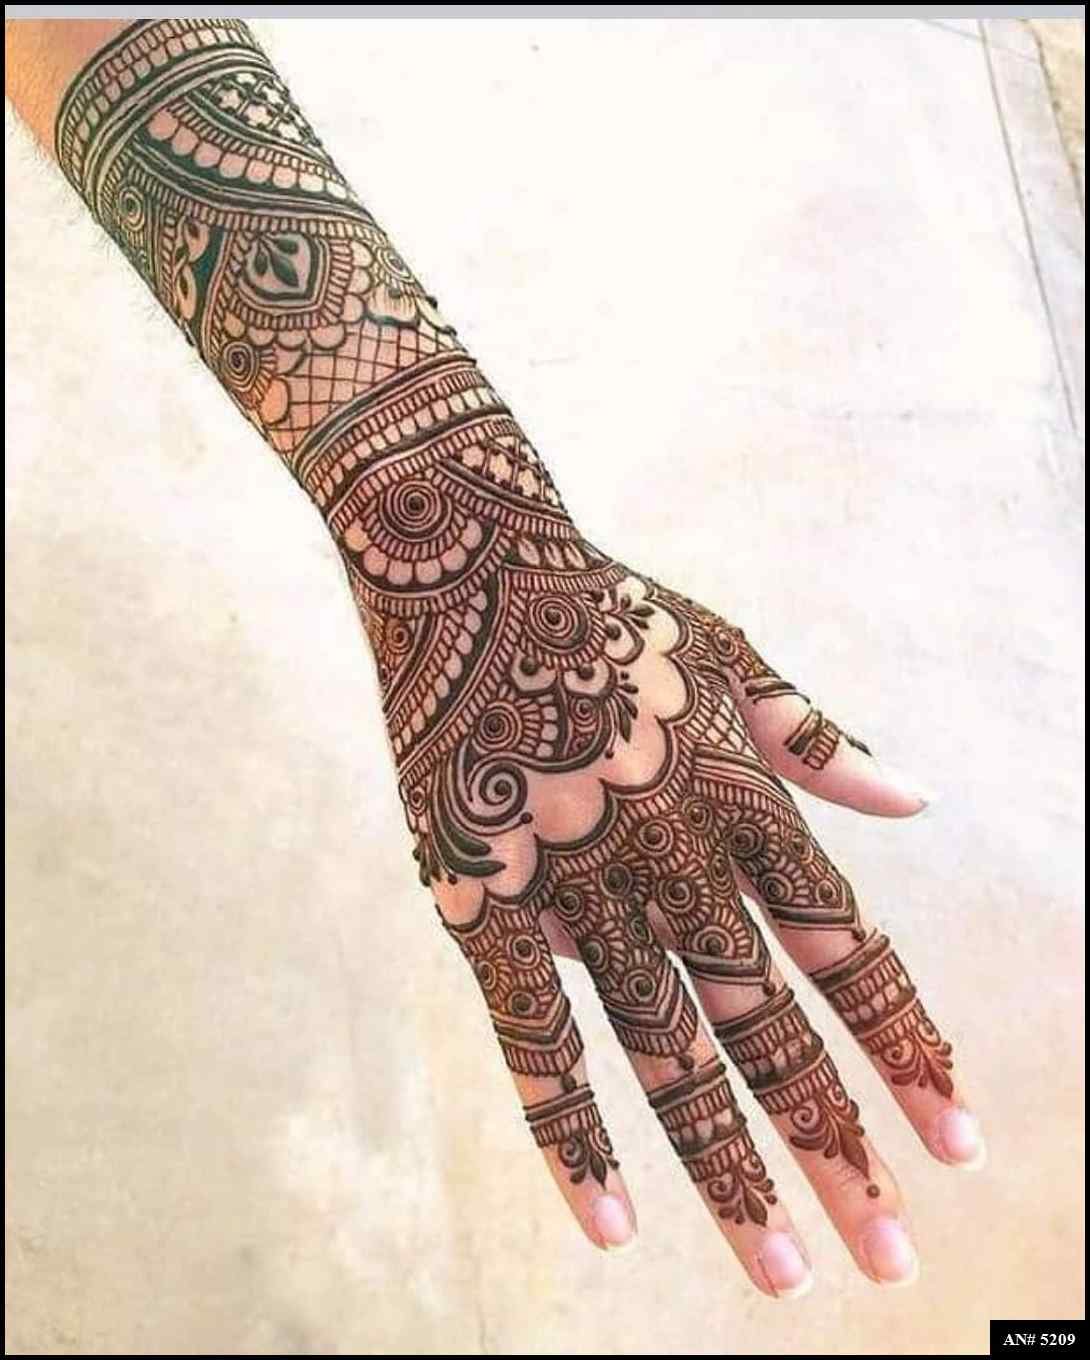 bridal-mehndi-designs-for-full-hands